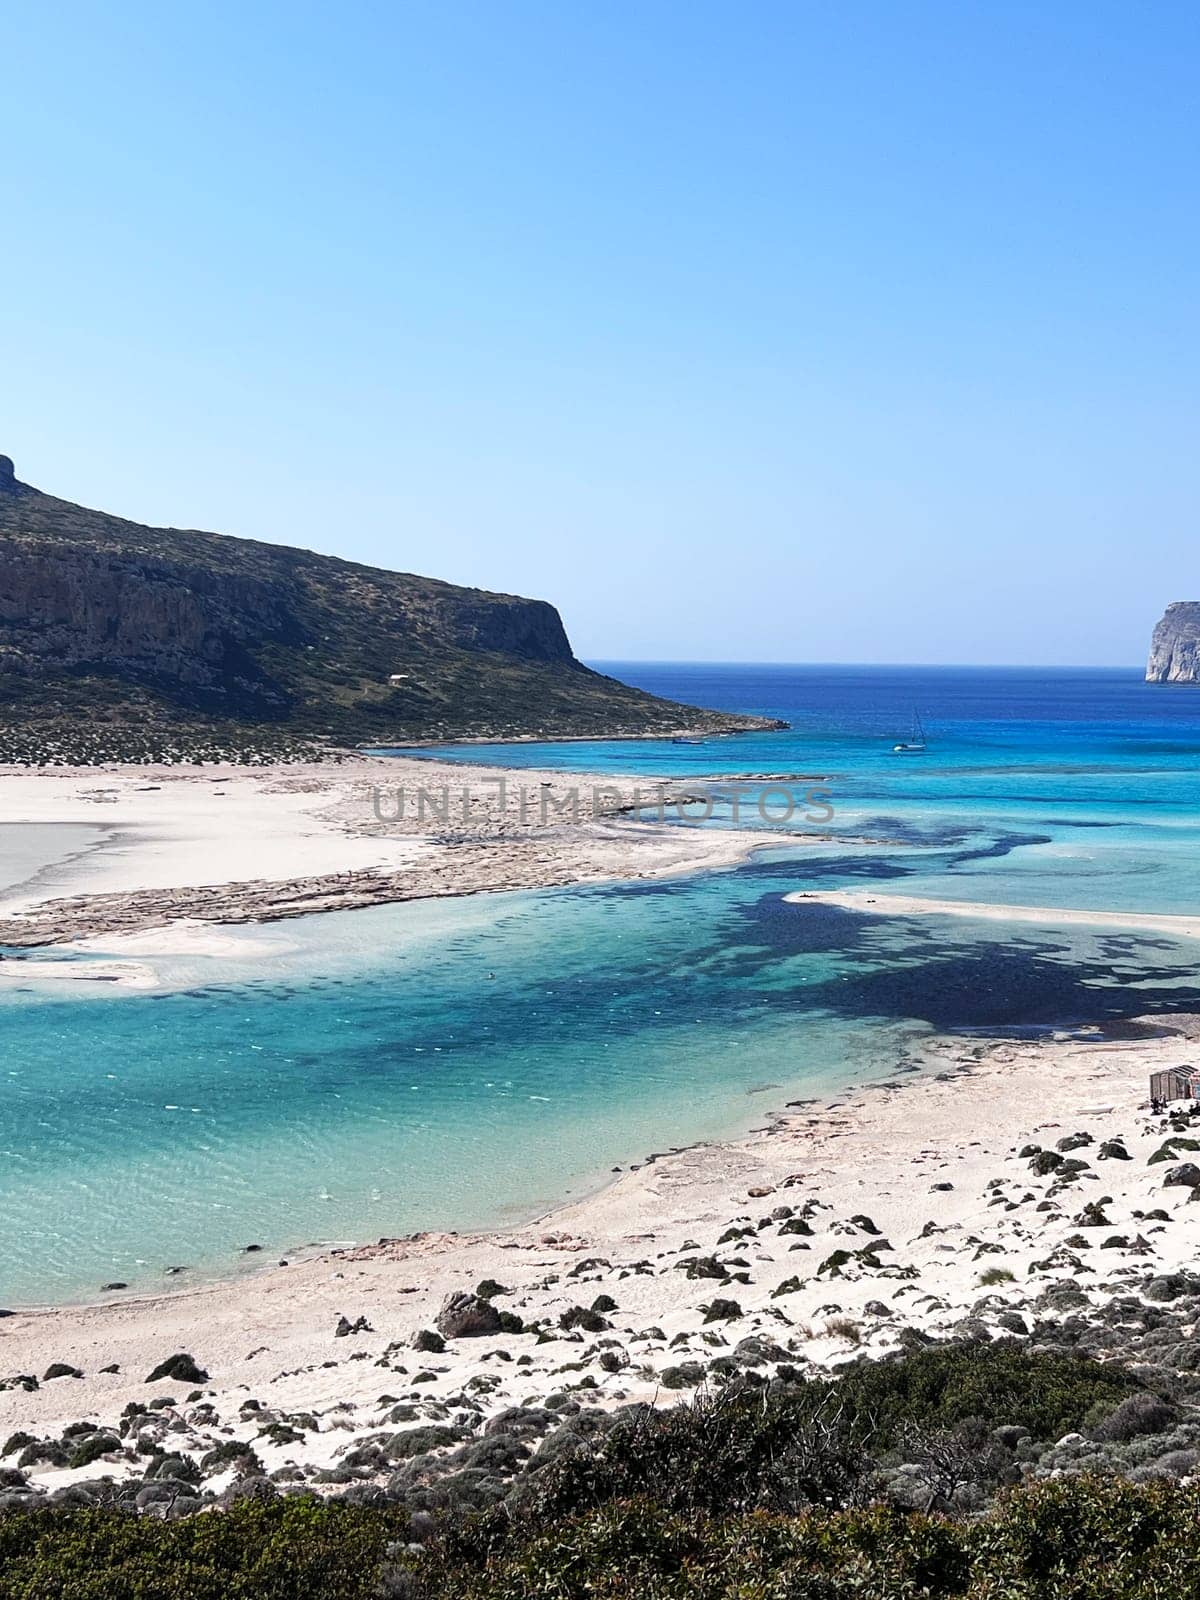 Balos Lagoon Beach and Cape Tigani, elevated view, Gramvousa Peninsula, Chania Region, Crete, Greek Islands, Greece, Europe by padgurskas